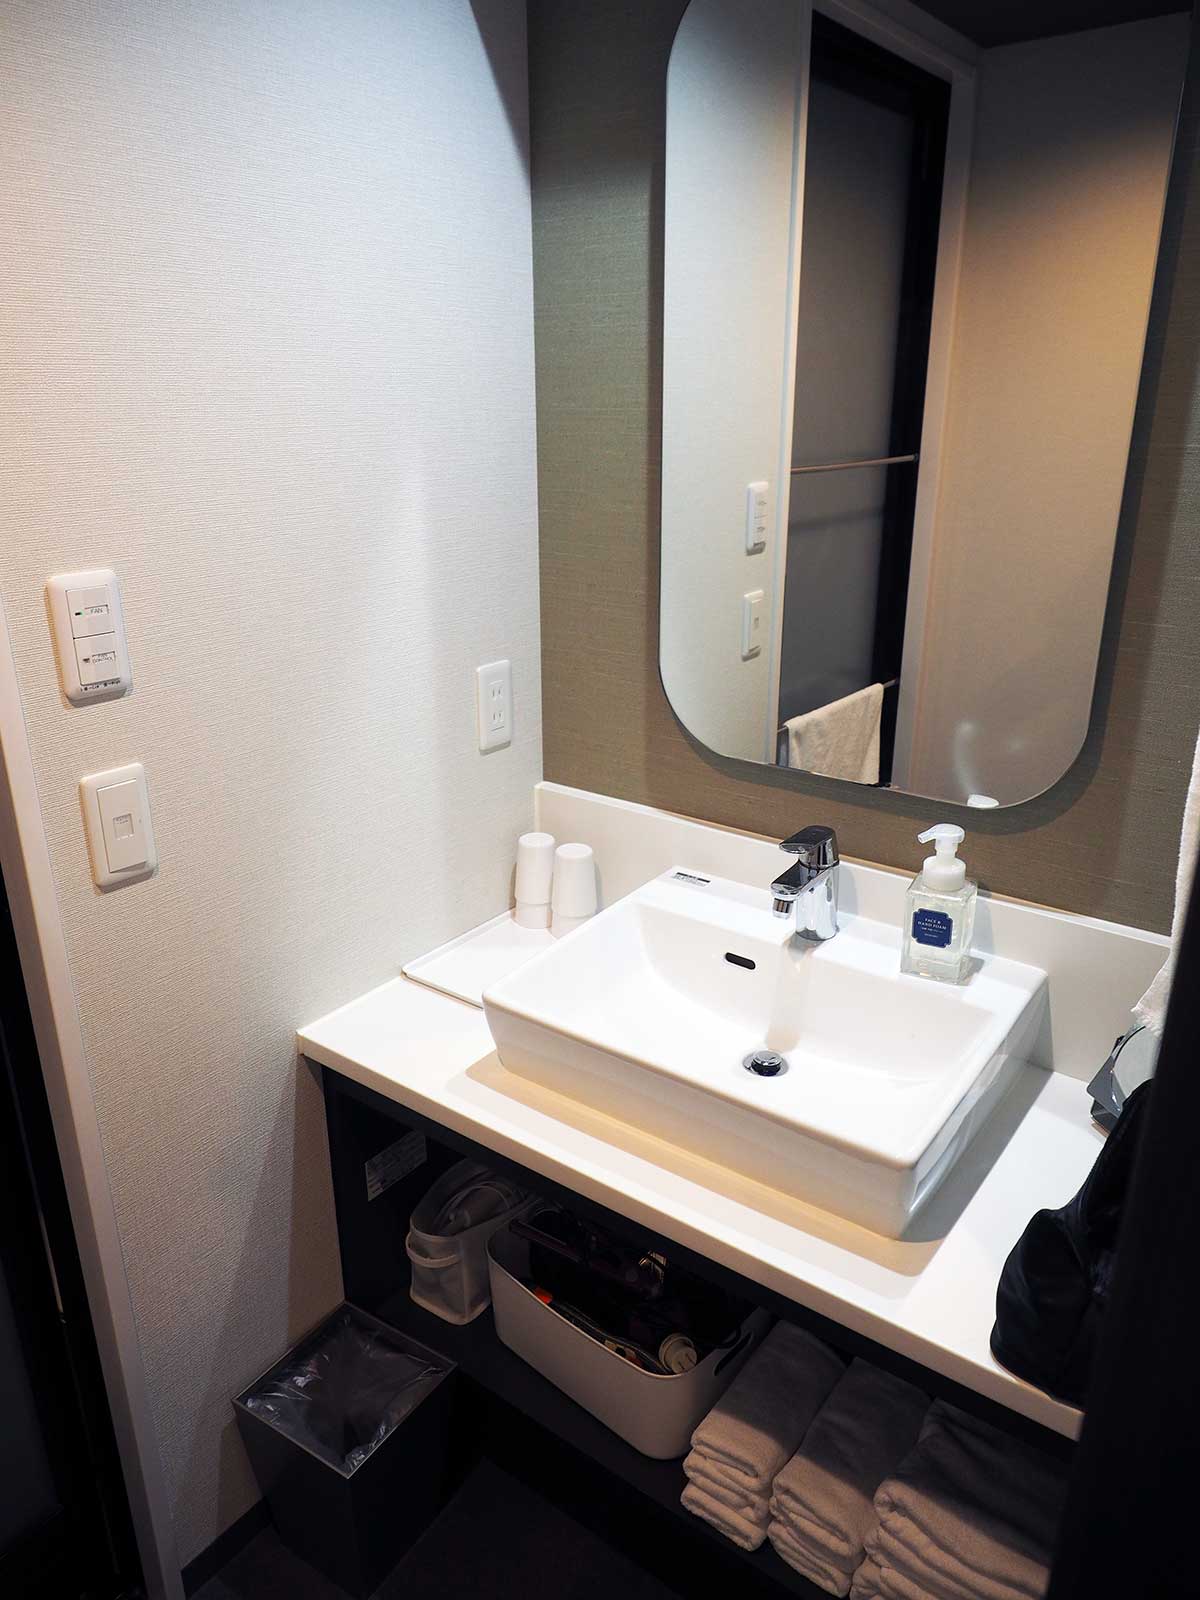 wash basin and mirror in bathroom